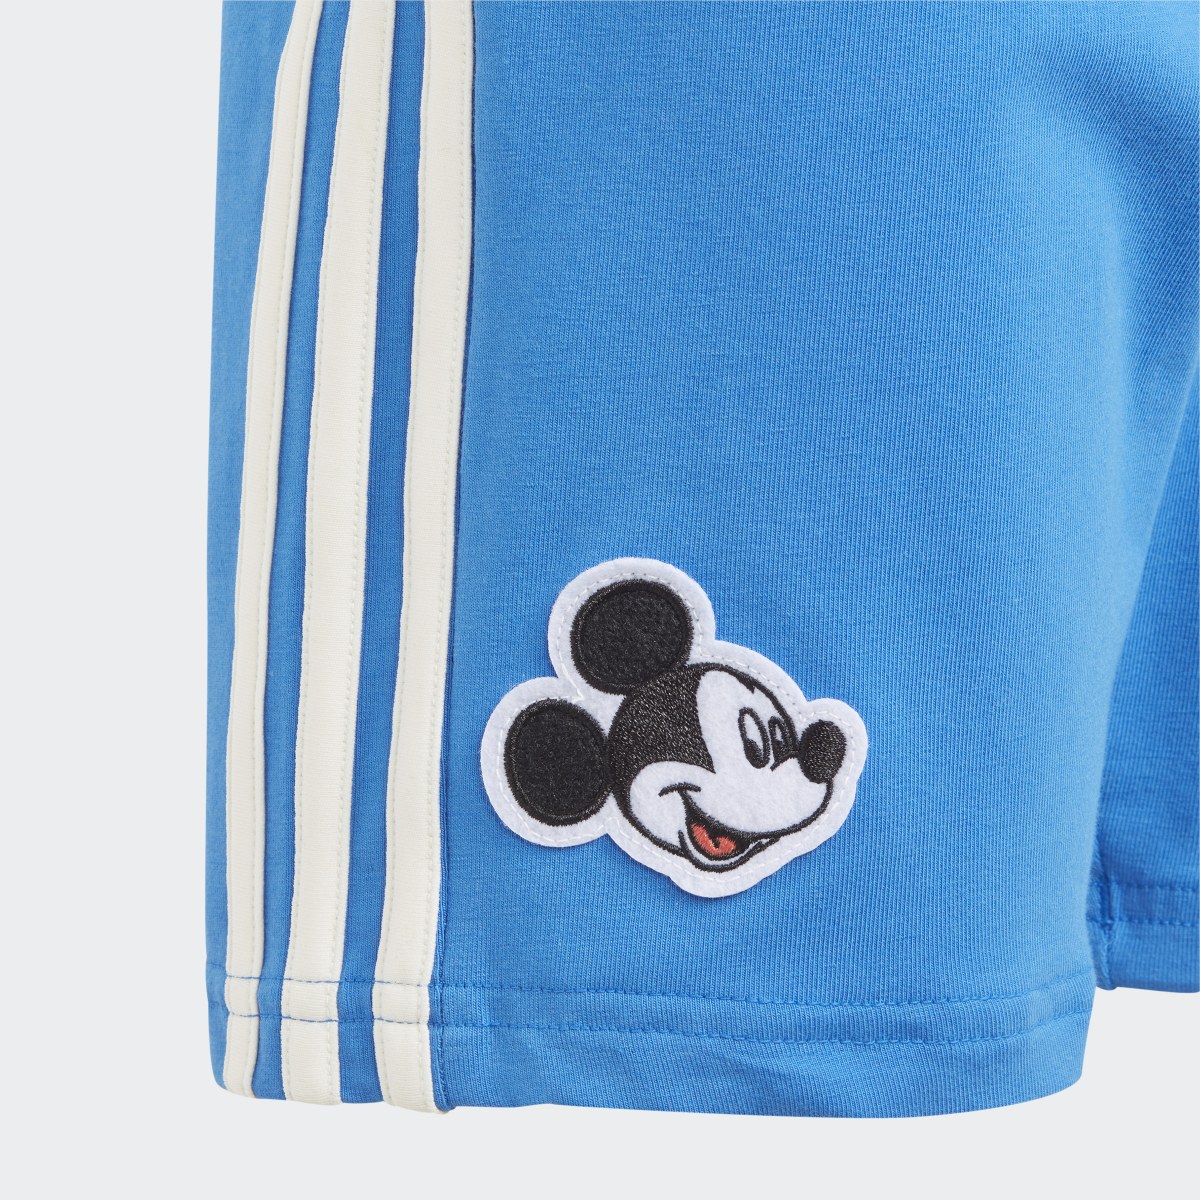 Adidas x Disney Mickey Mouse Tee and Shorts Set. 8